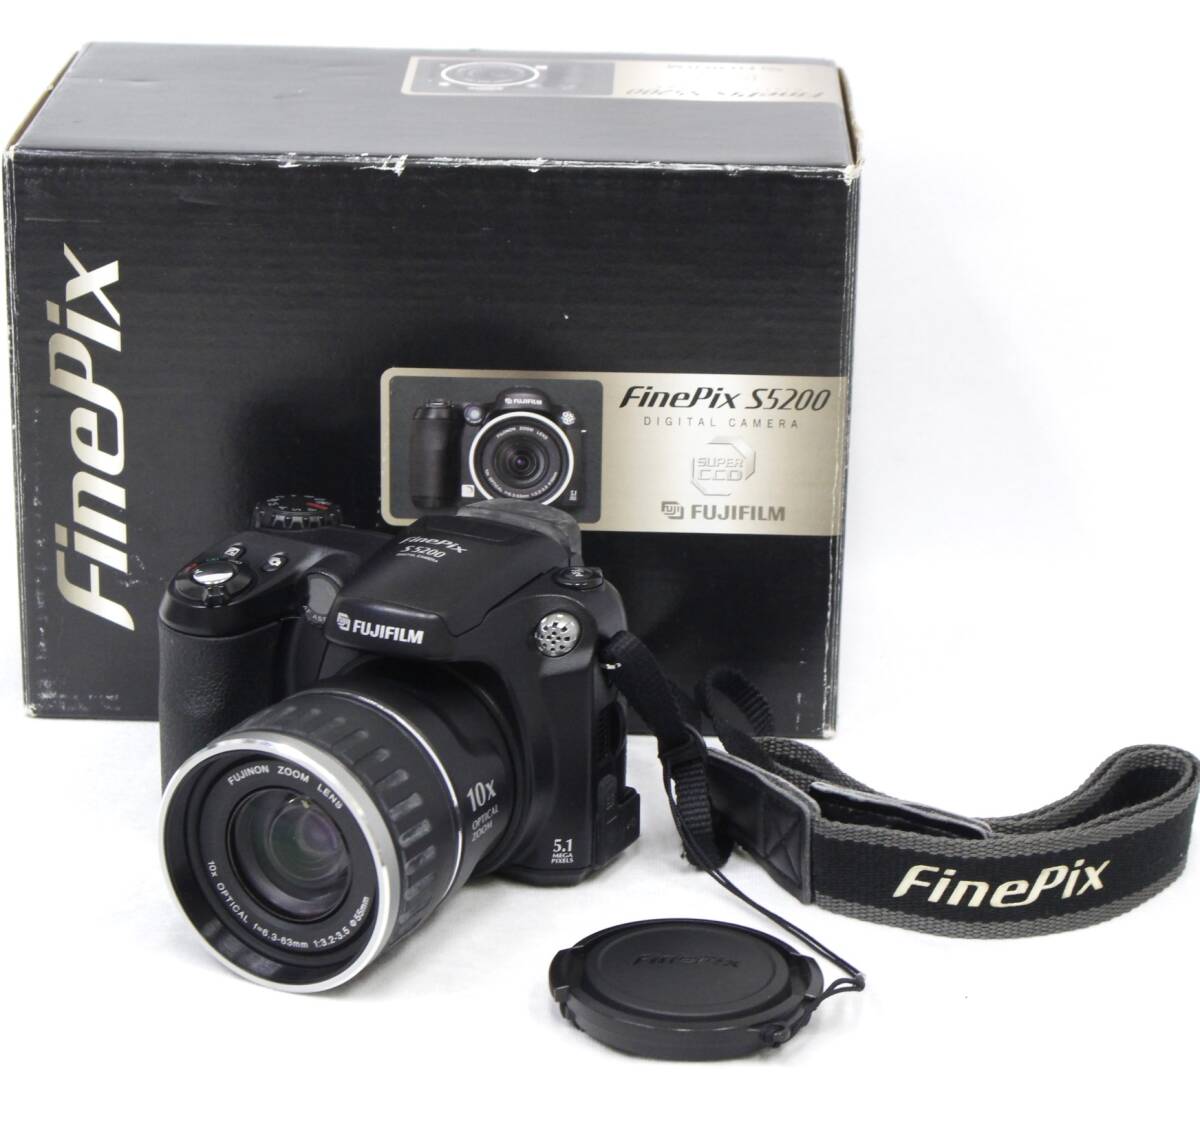 FUJIFILM【FinePix S5200】ネオ一眼デジタルカメラ 10倍ズームレンズ 10X OPTICAL 箱・説明書付属 単三電池4本 240308V(NT)の画像1